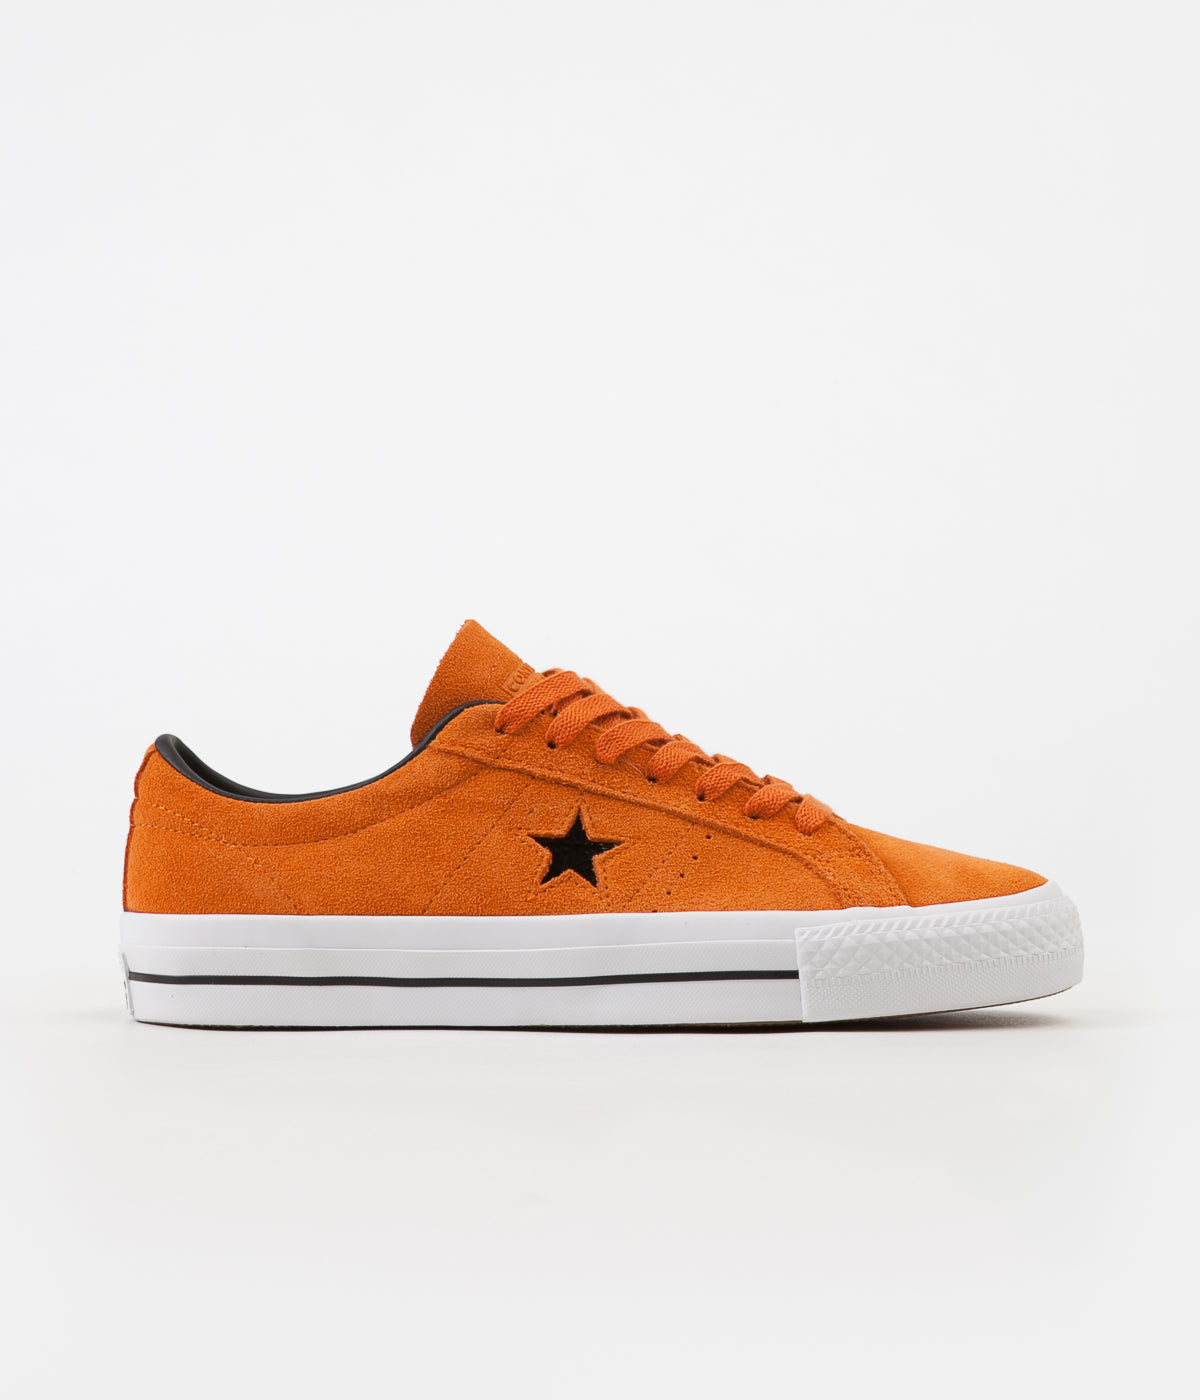 converse one star orange